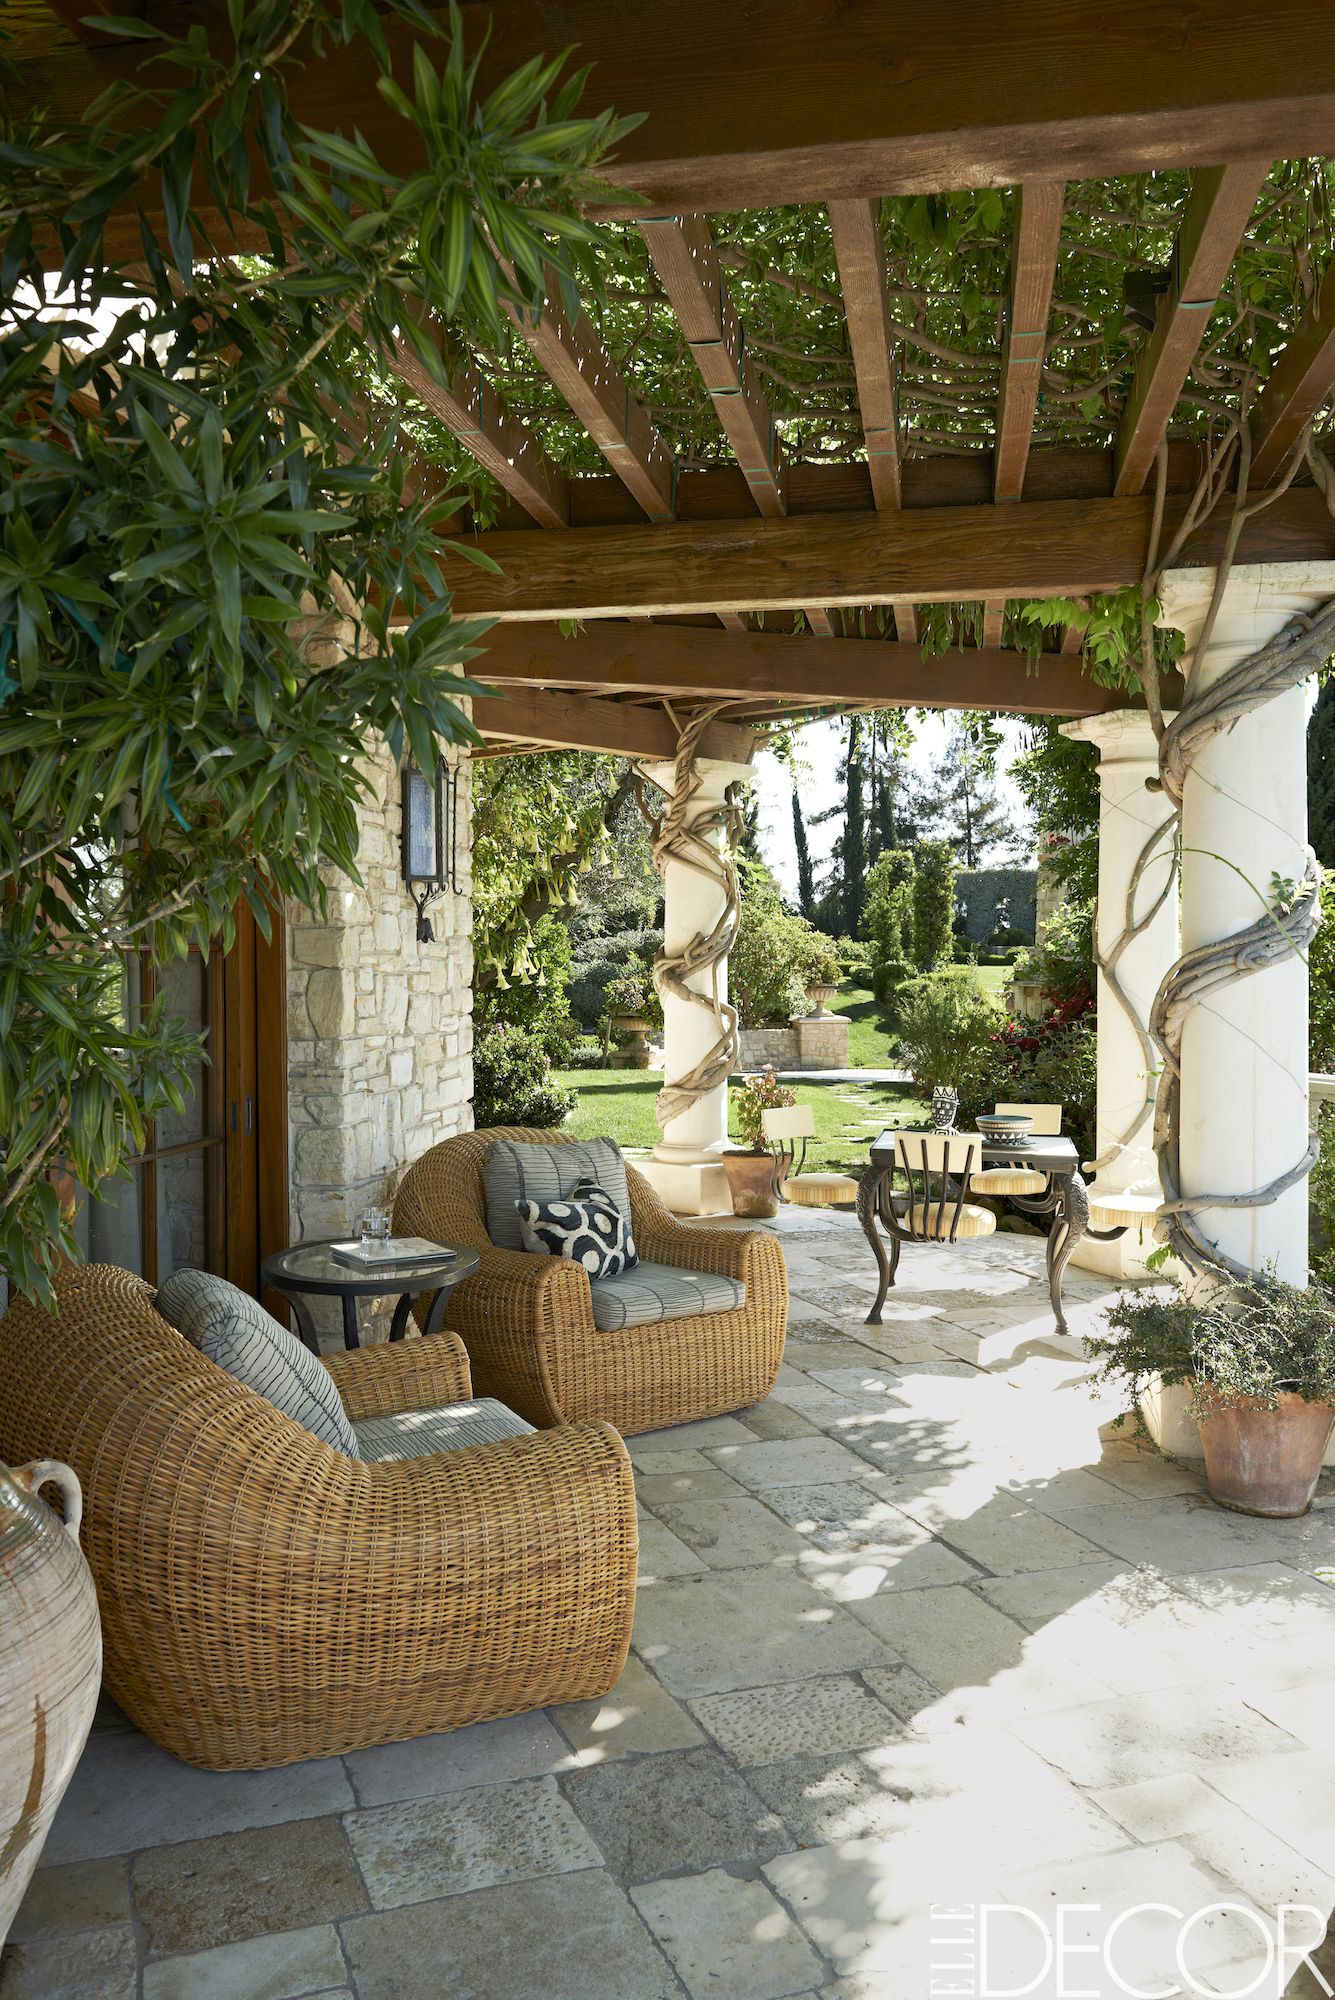 40 best small patio ideas - small patio furniture u0026 design CNLFUDM